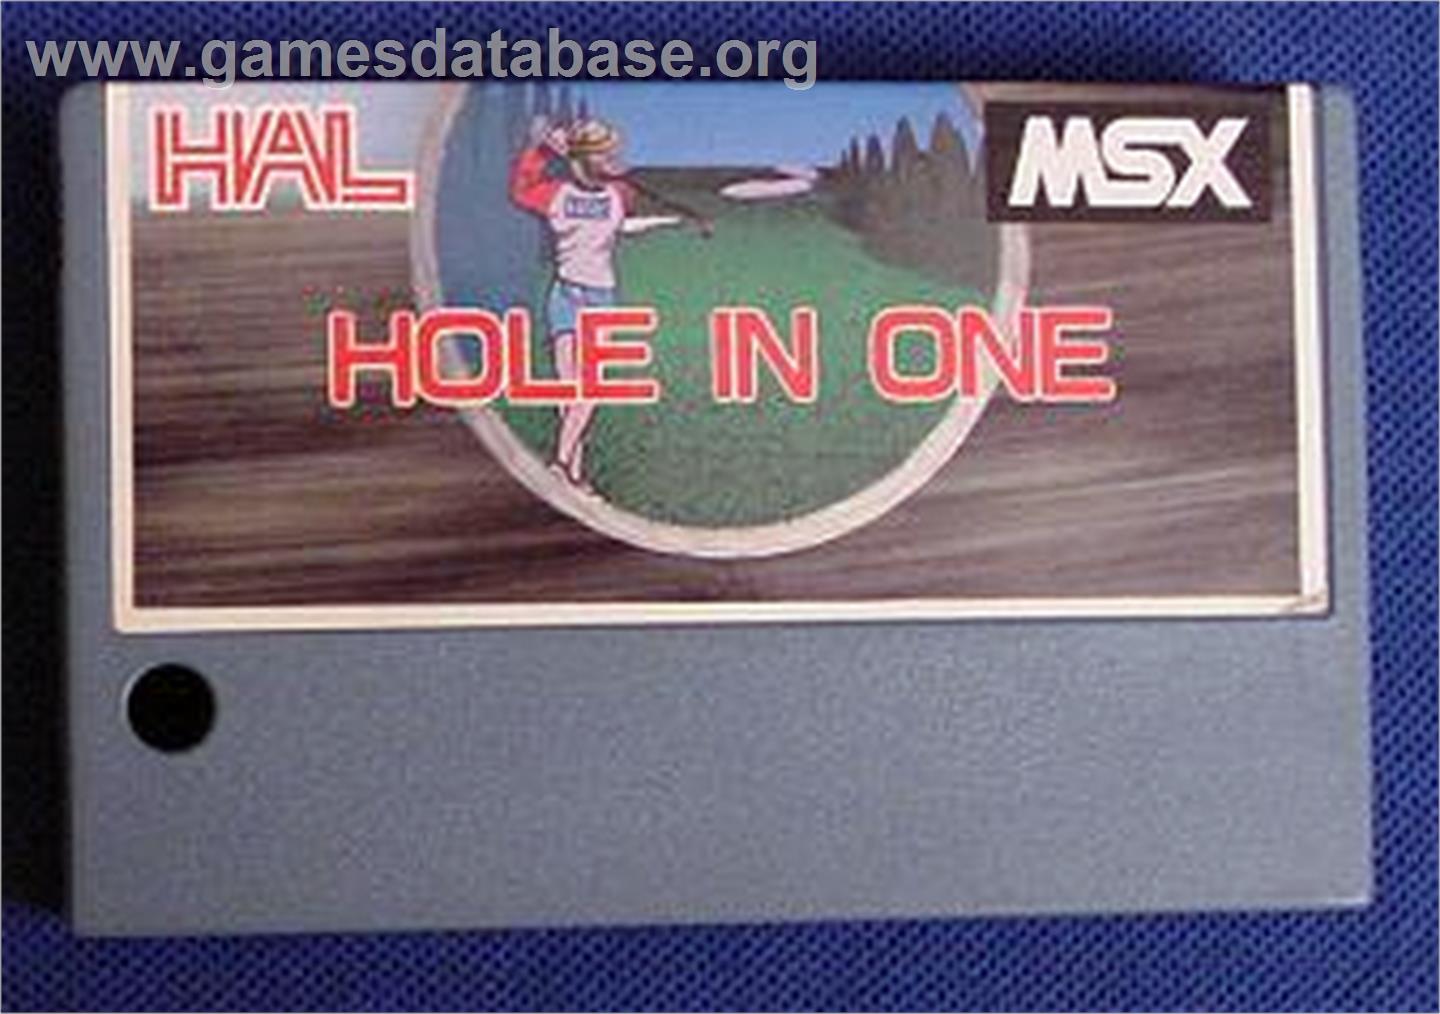 Hole in One Professional - MSX - Artwork - Cartridge